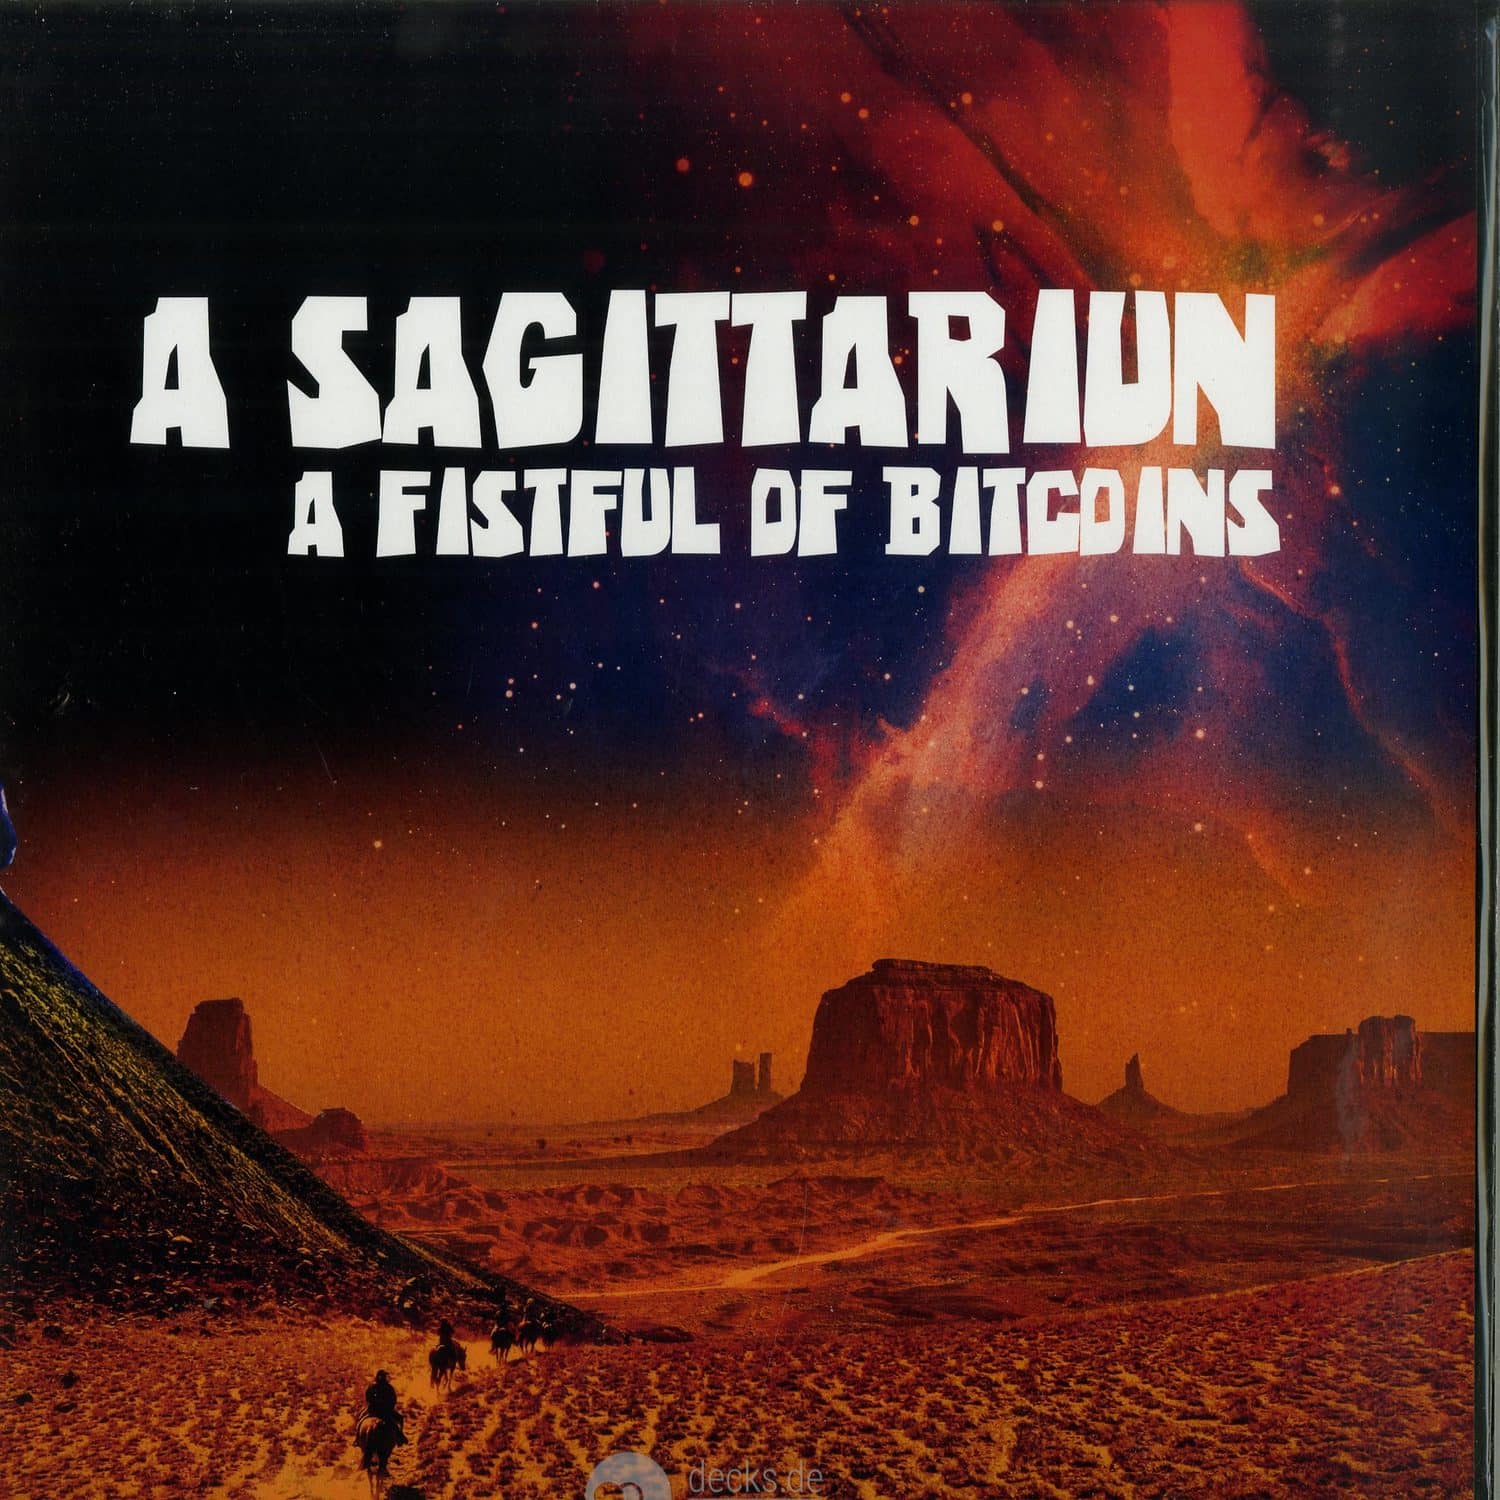 A Sagittariun - A FISTFUL OF BITCOINS